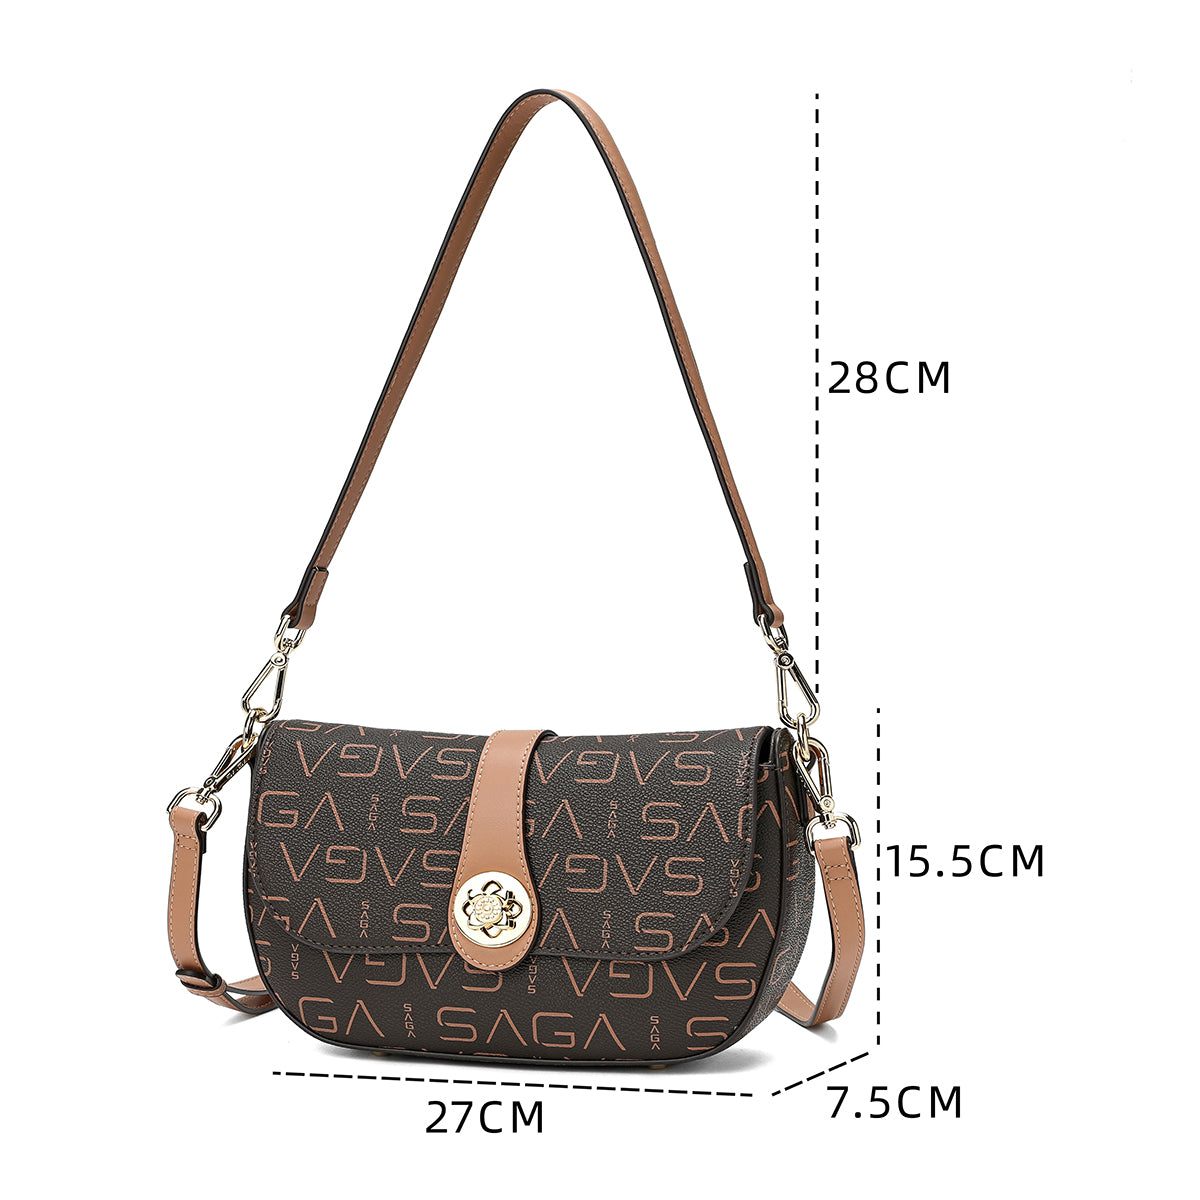 Elegant coffee brown women's shoulder bag with Saga logo, width 22 cm